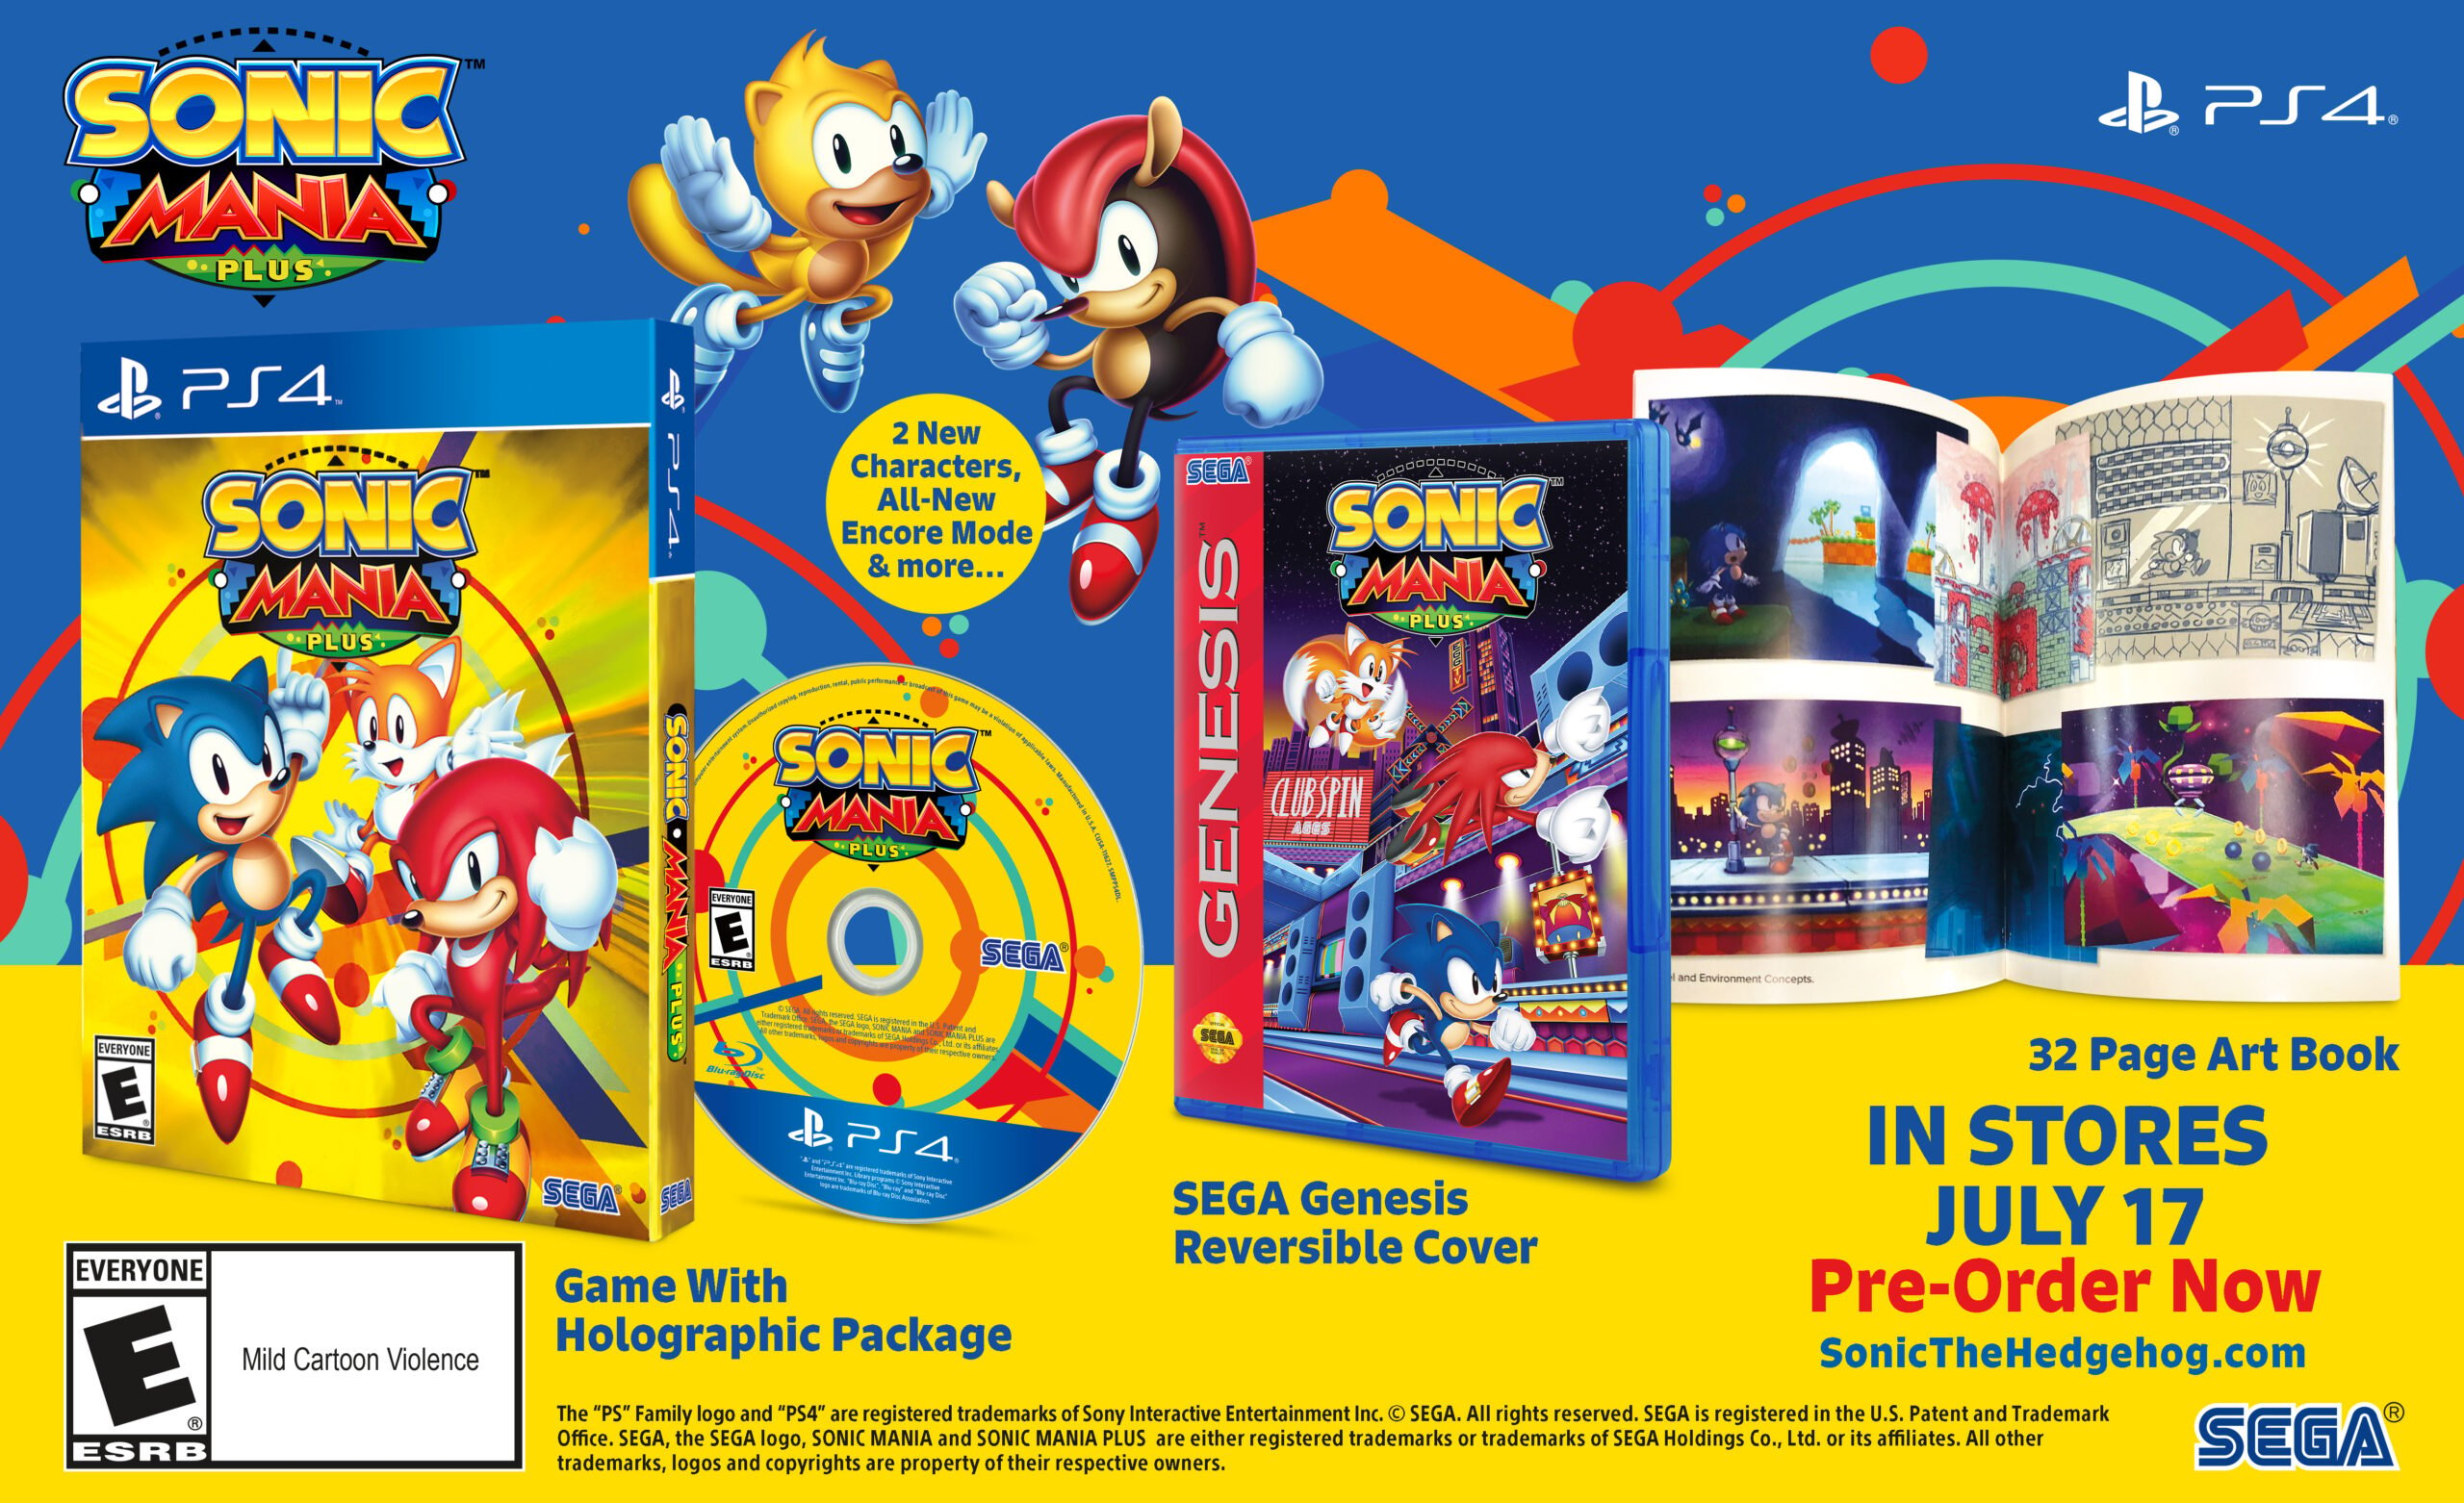 Sonic Mania Plus - (NSW) Nintendo Switch (European Import) – J&L Video  Games New York City